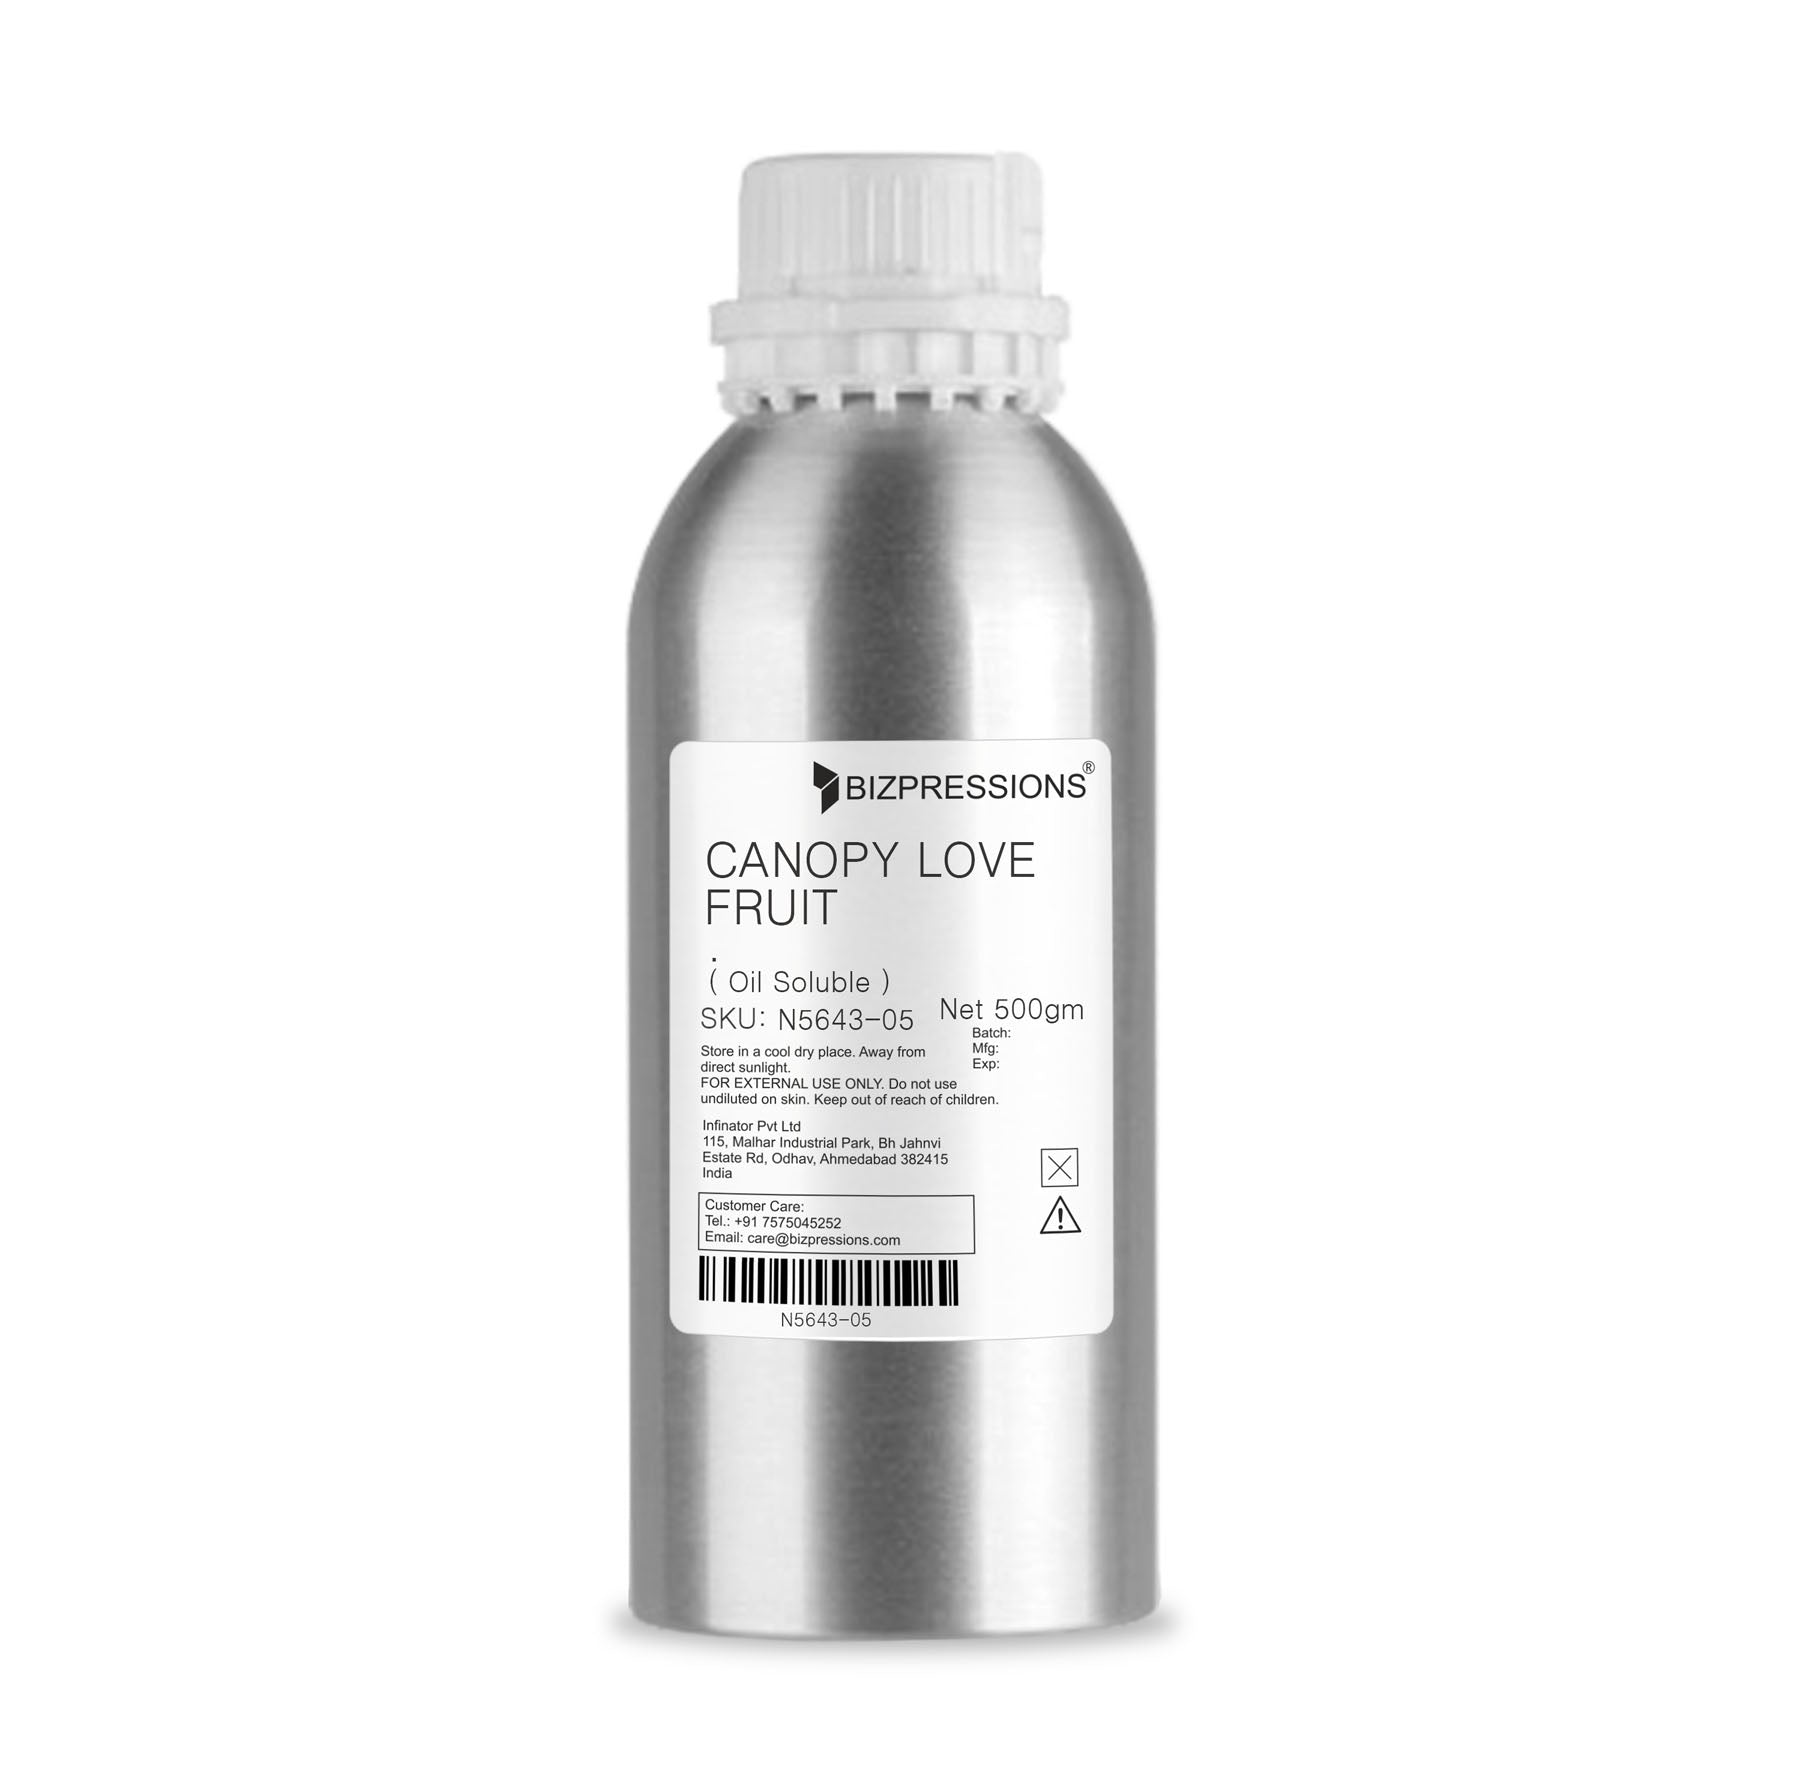 CANOPY LOVE FRUIT - Fragrance ( Oil Soluble ) - 500 gm